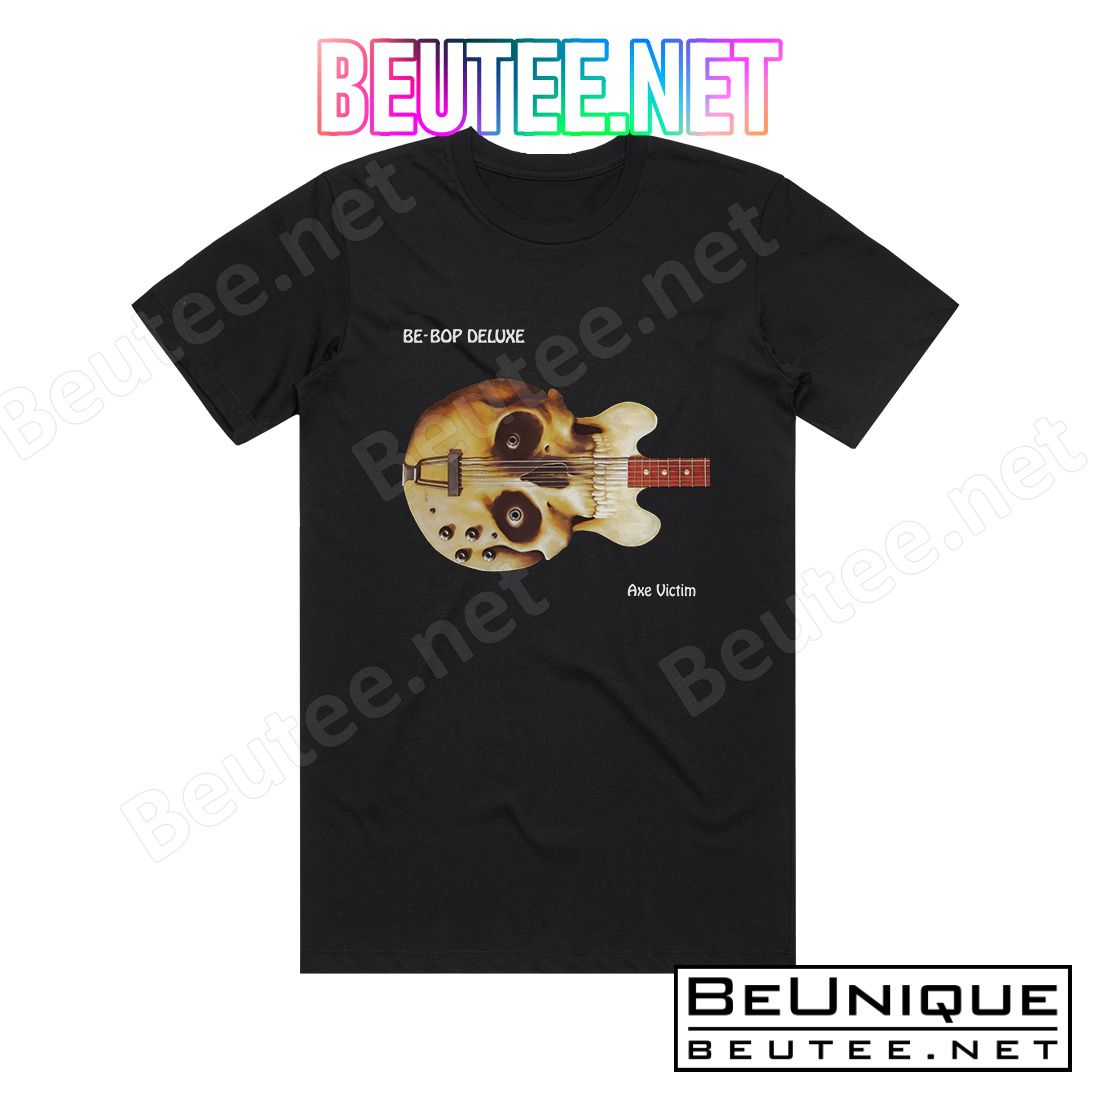 Be Bop Deluxe Axe Victim Album Cover T-Shirt